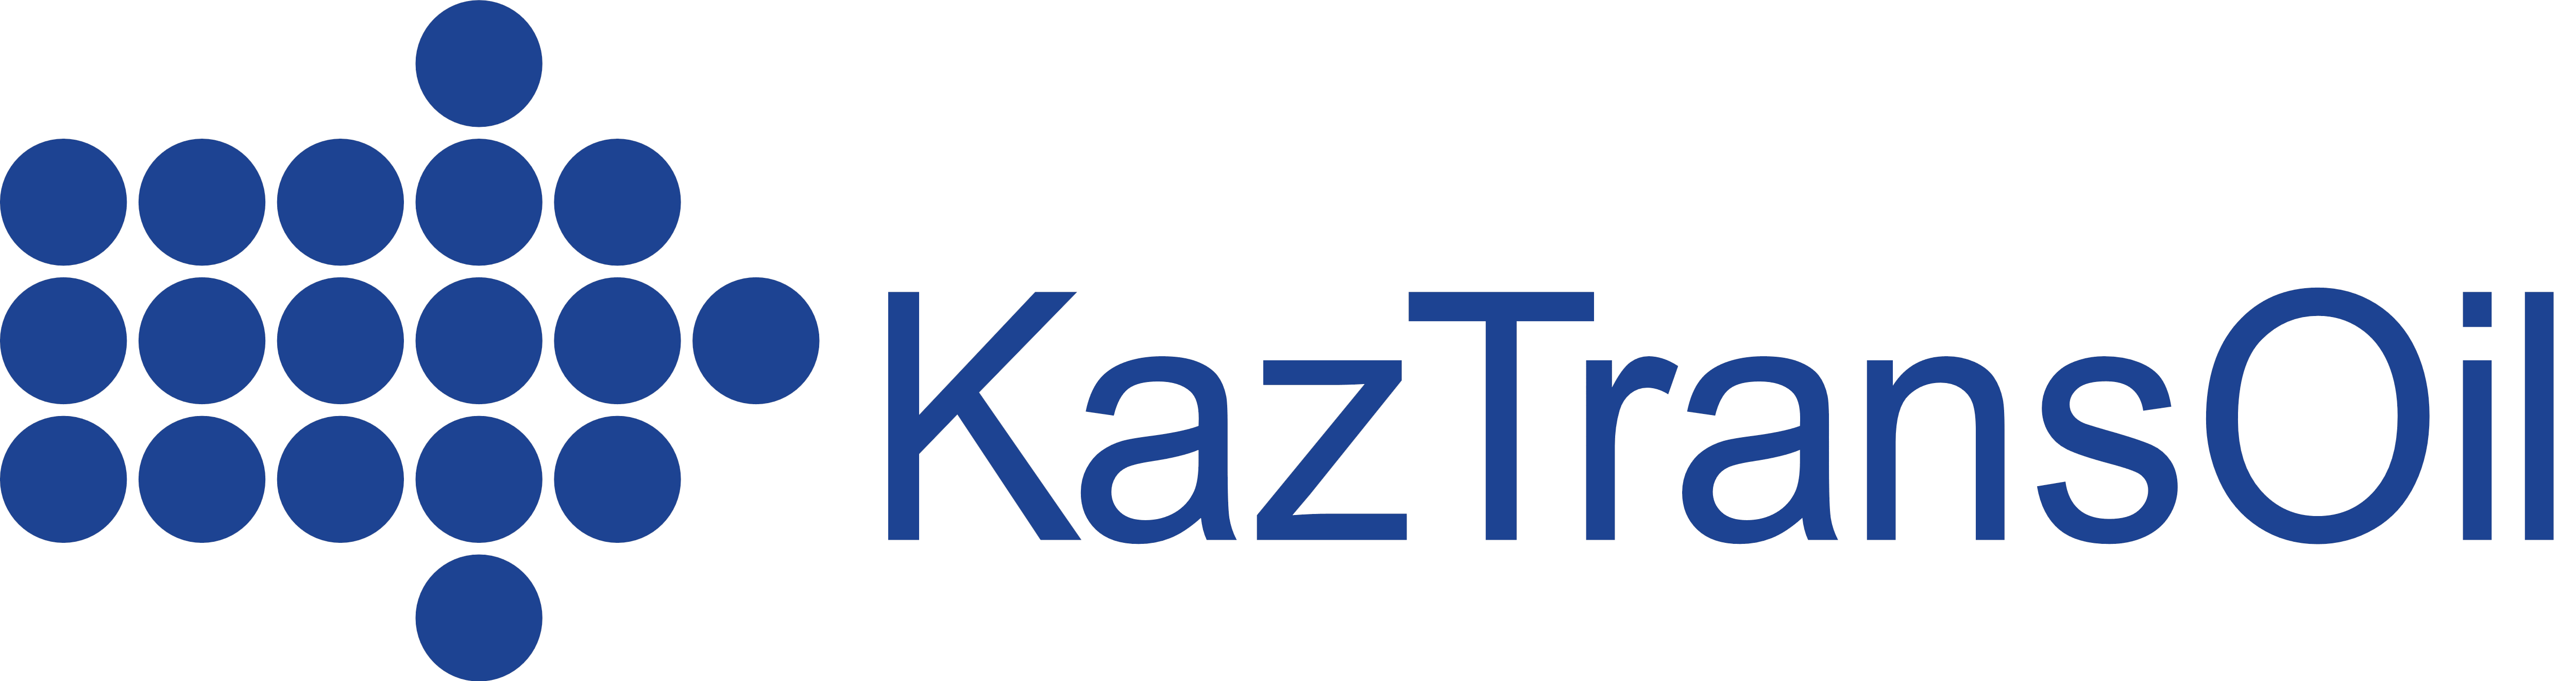 KazTransOil logo, logotype. All logos, emblems, brands pictures ...